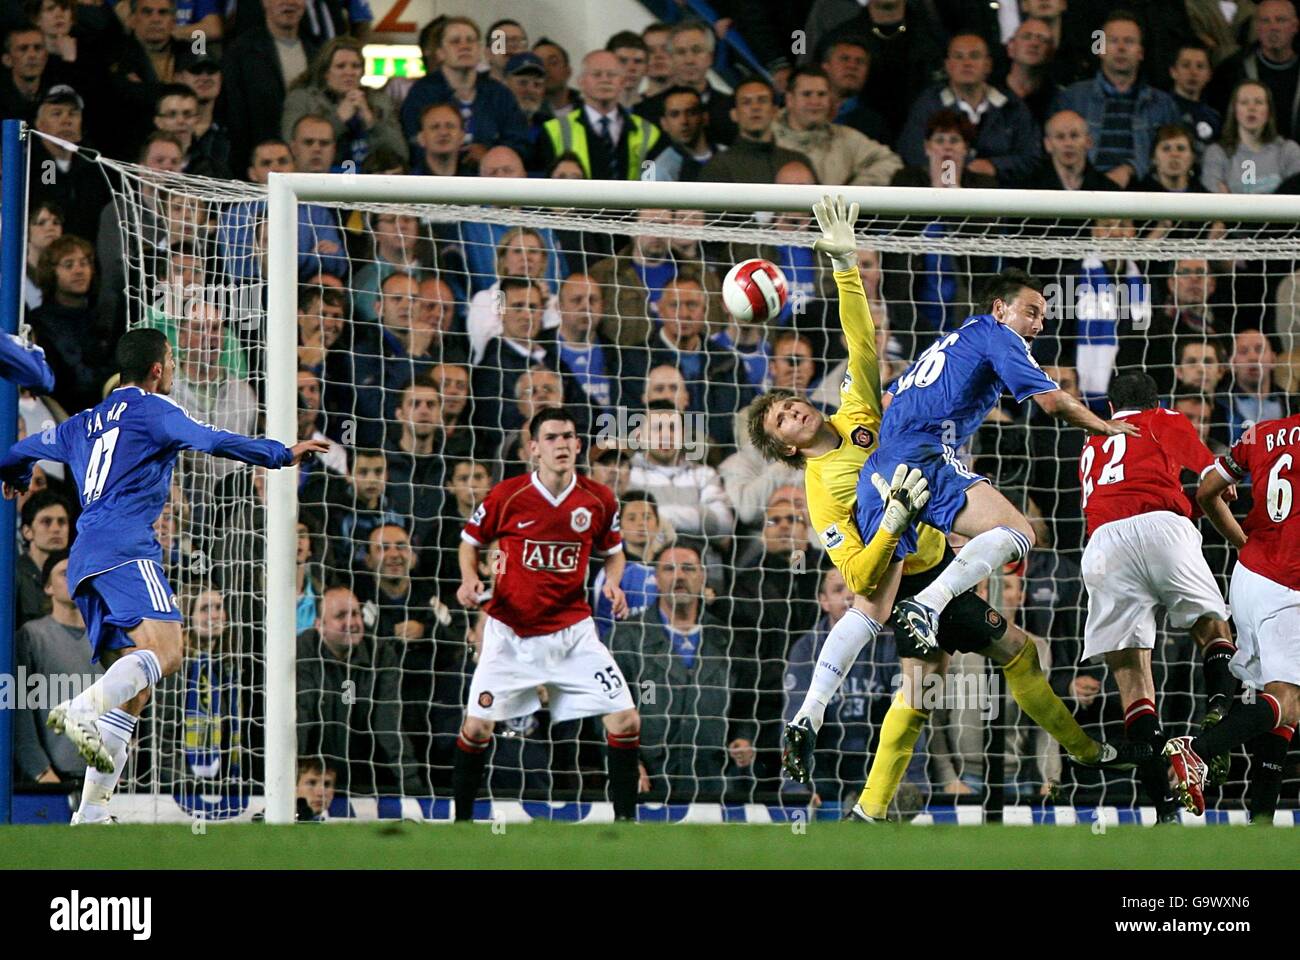 Chelsea's Ben Sahar (l) makes a shot on goal as Manchester United's goalkeeper Tomasz Kuszczak makes a save Stock Photo